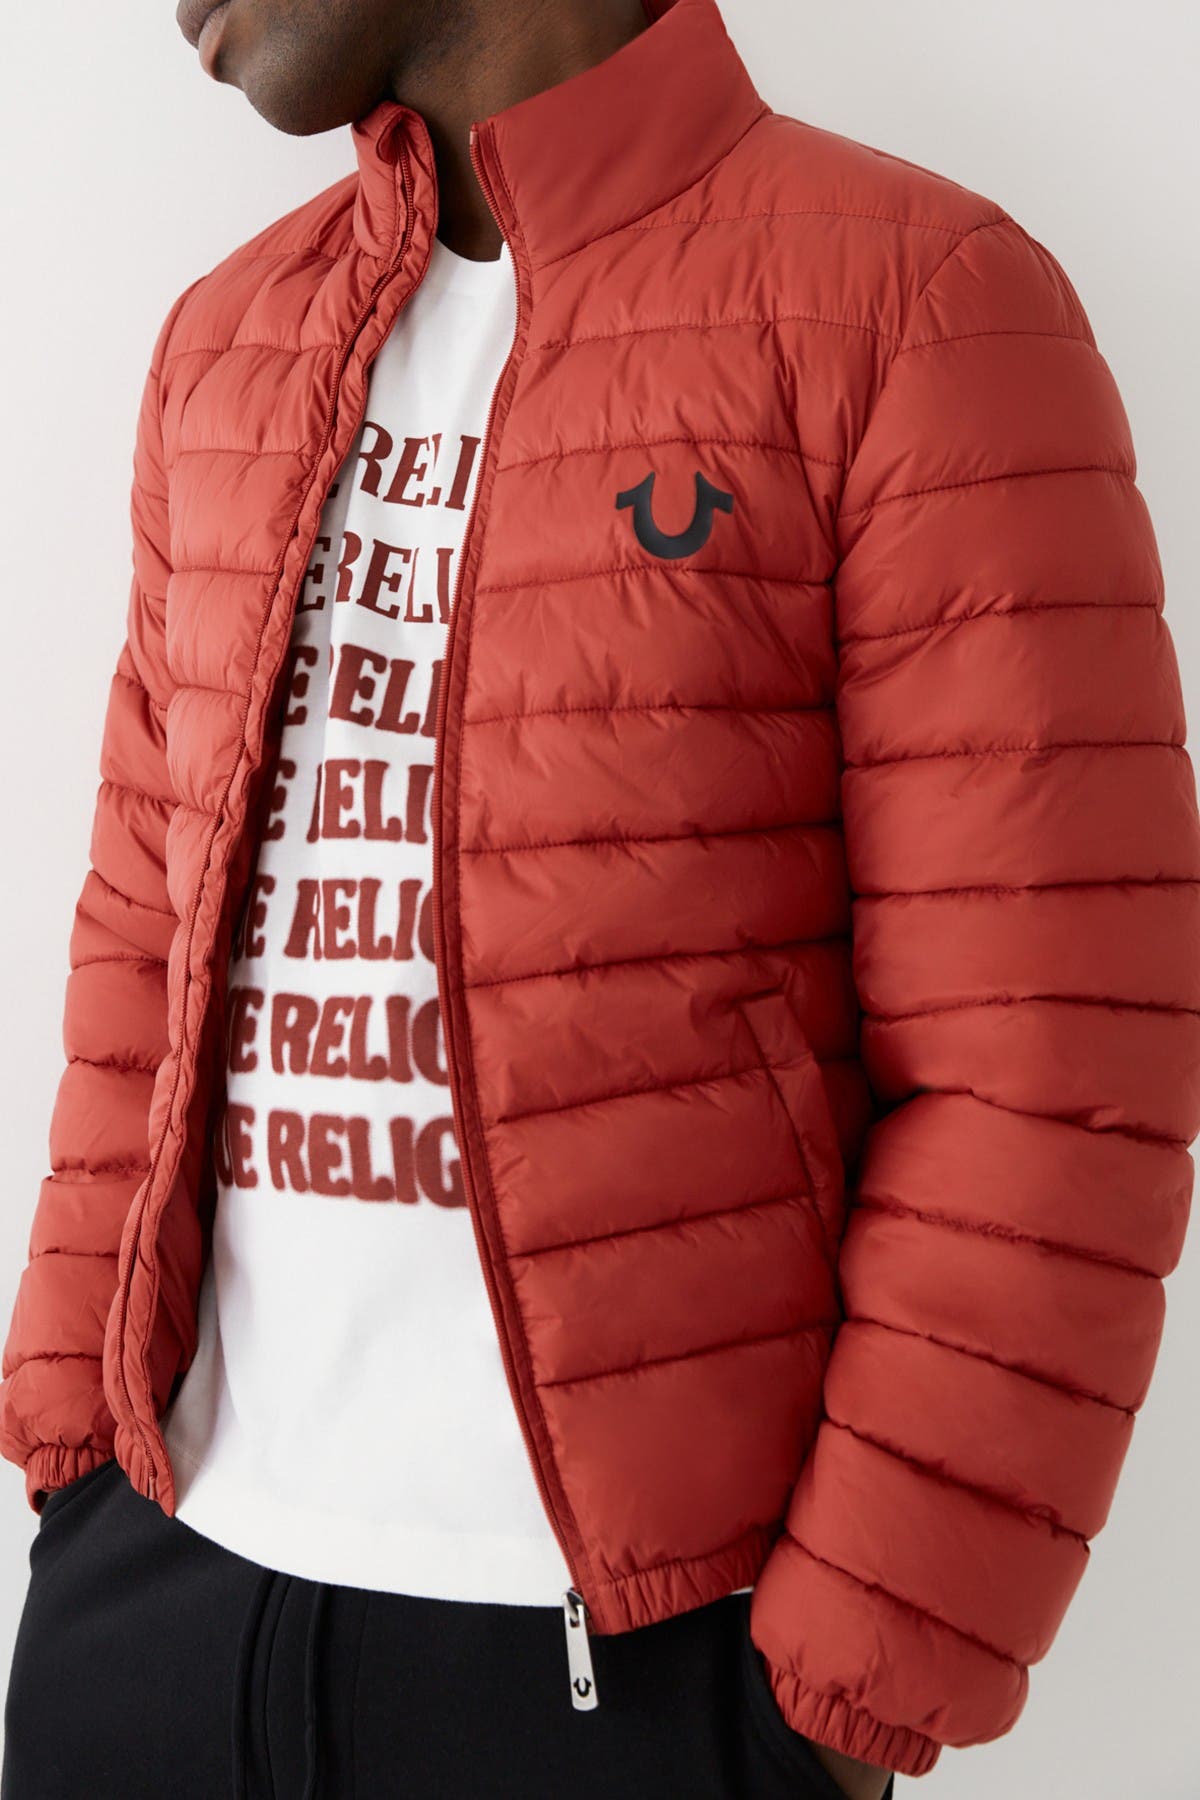 red true religion jacket